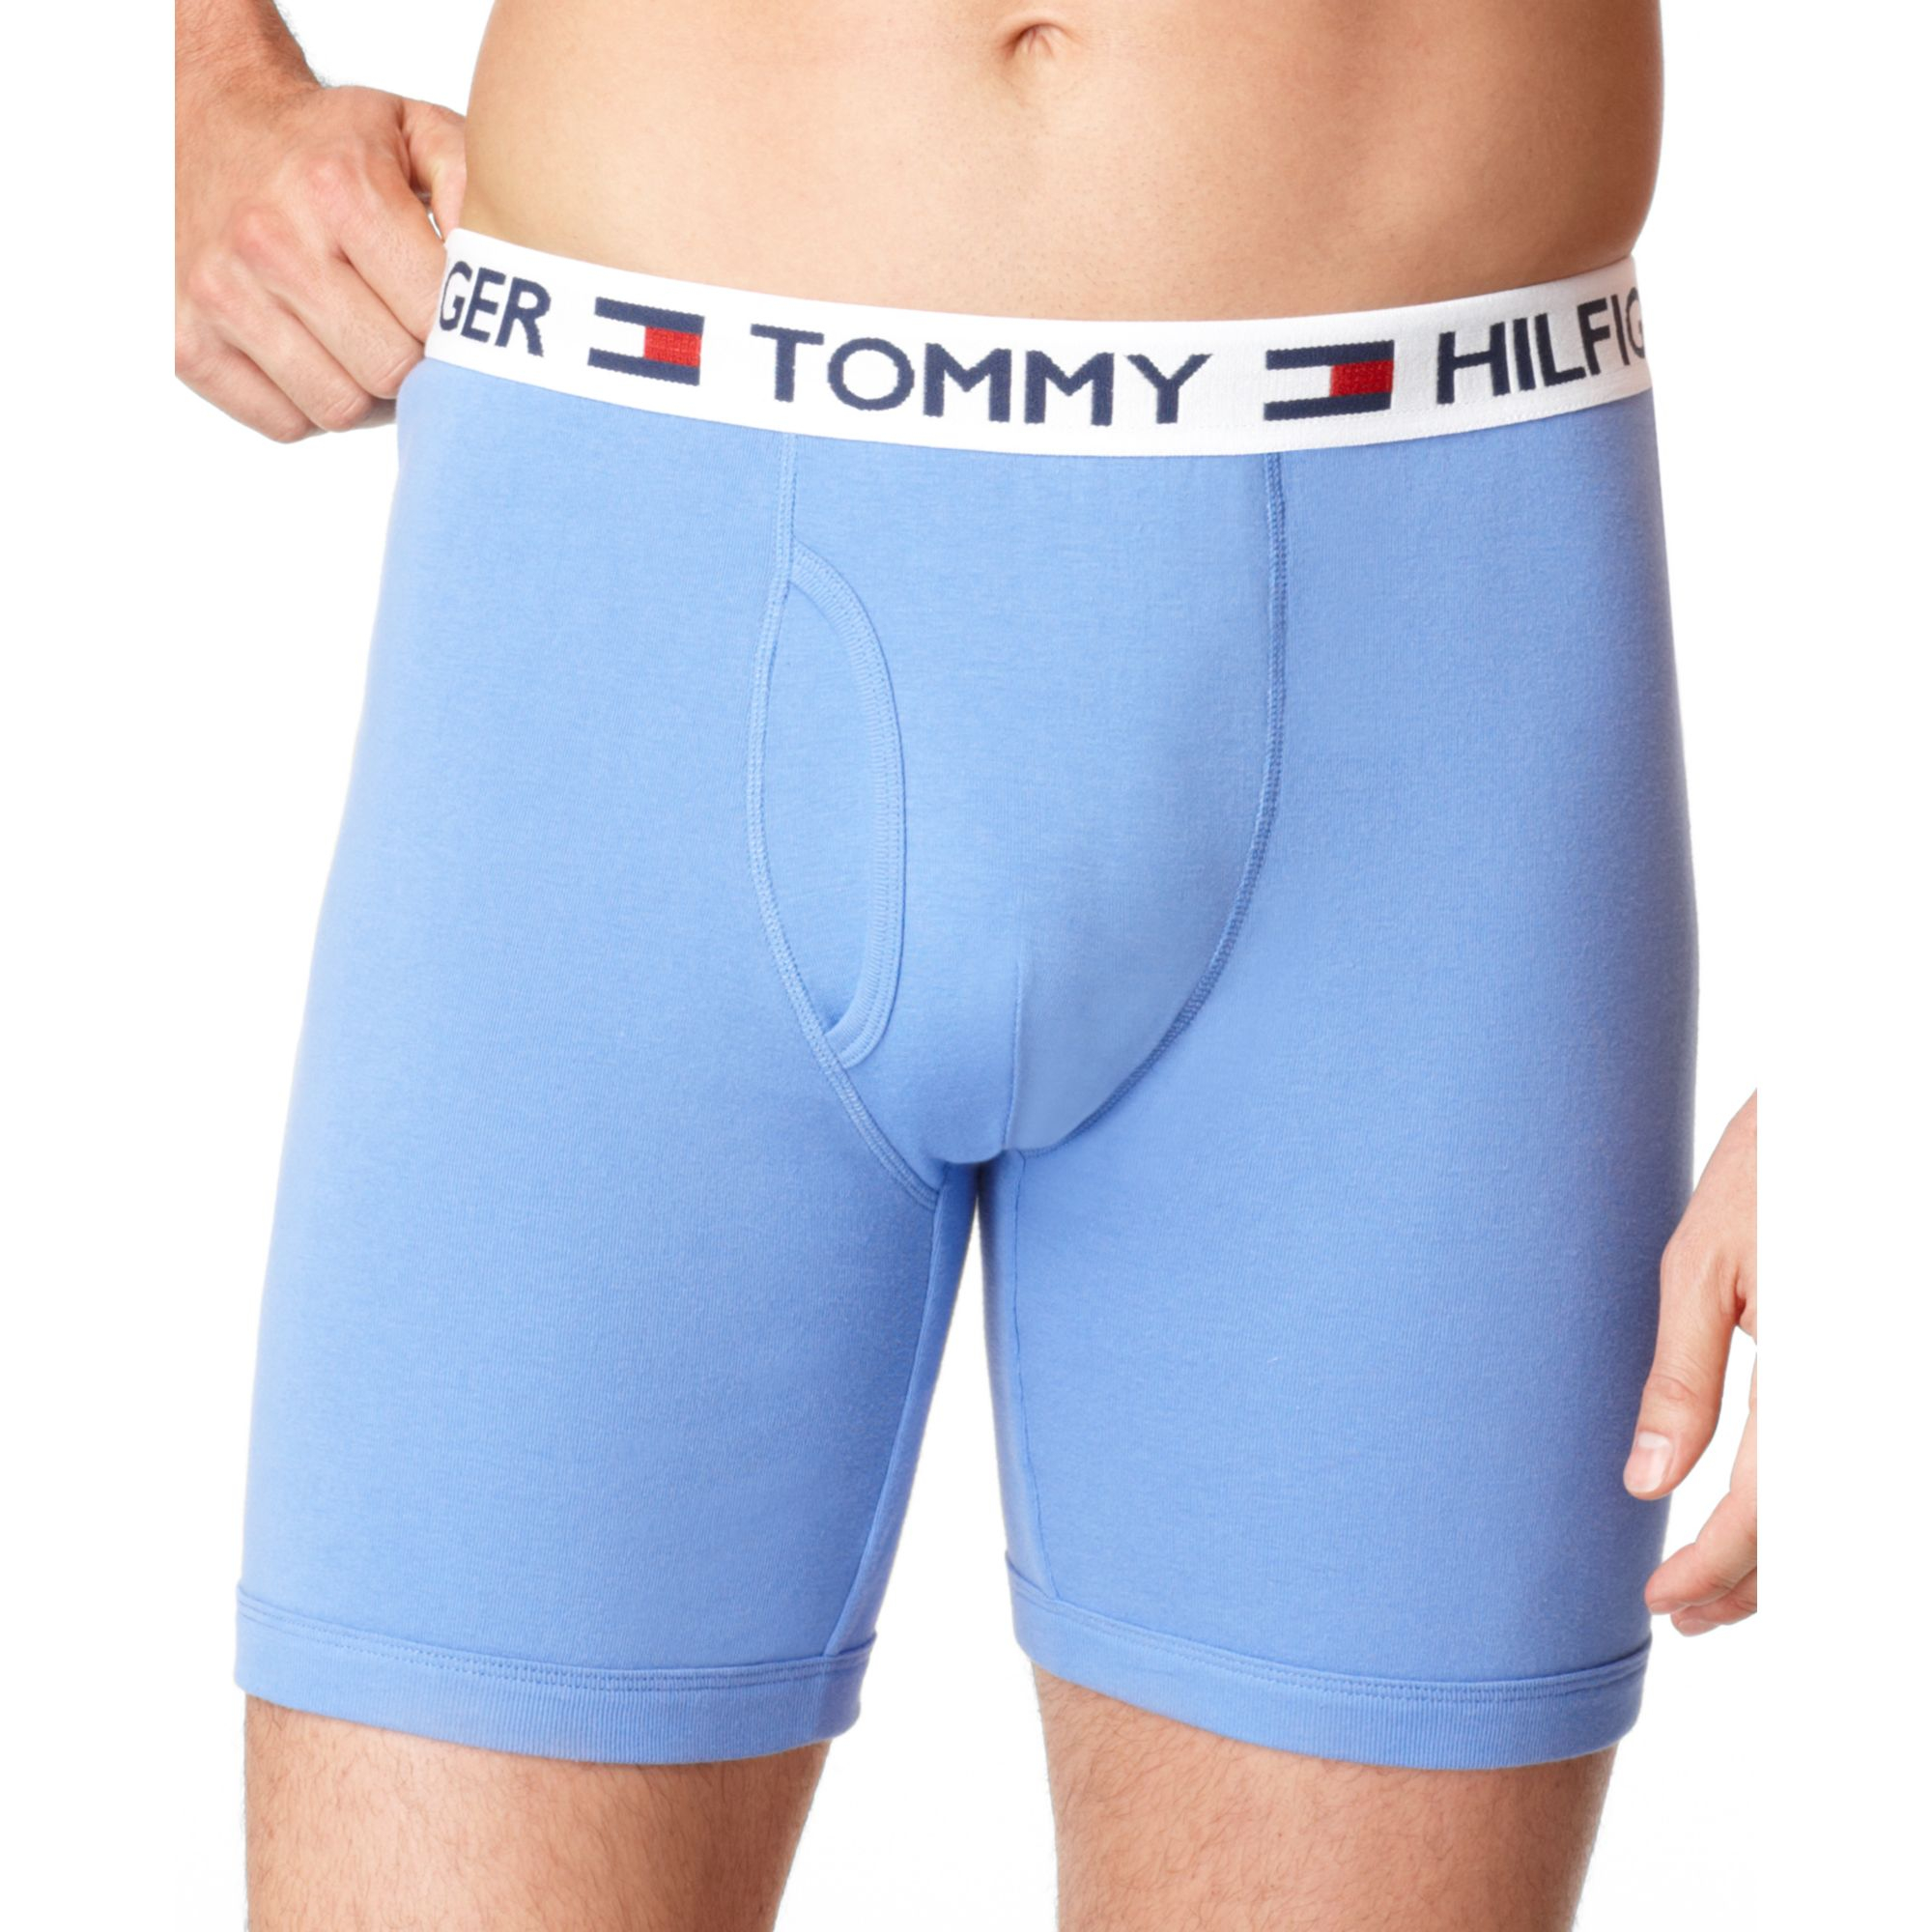 tommy hilfiger blue boxers